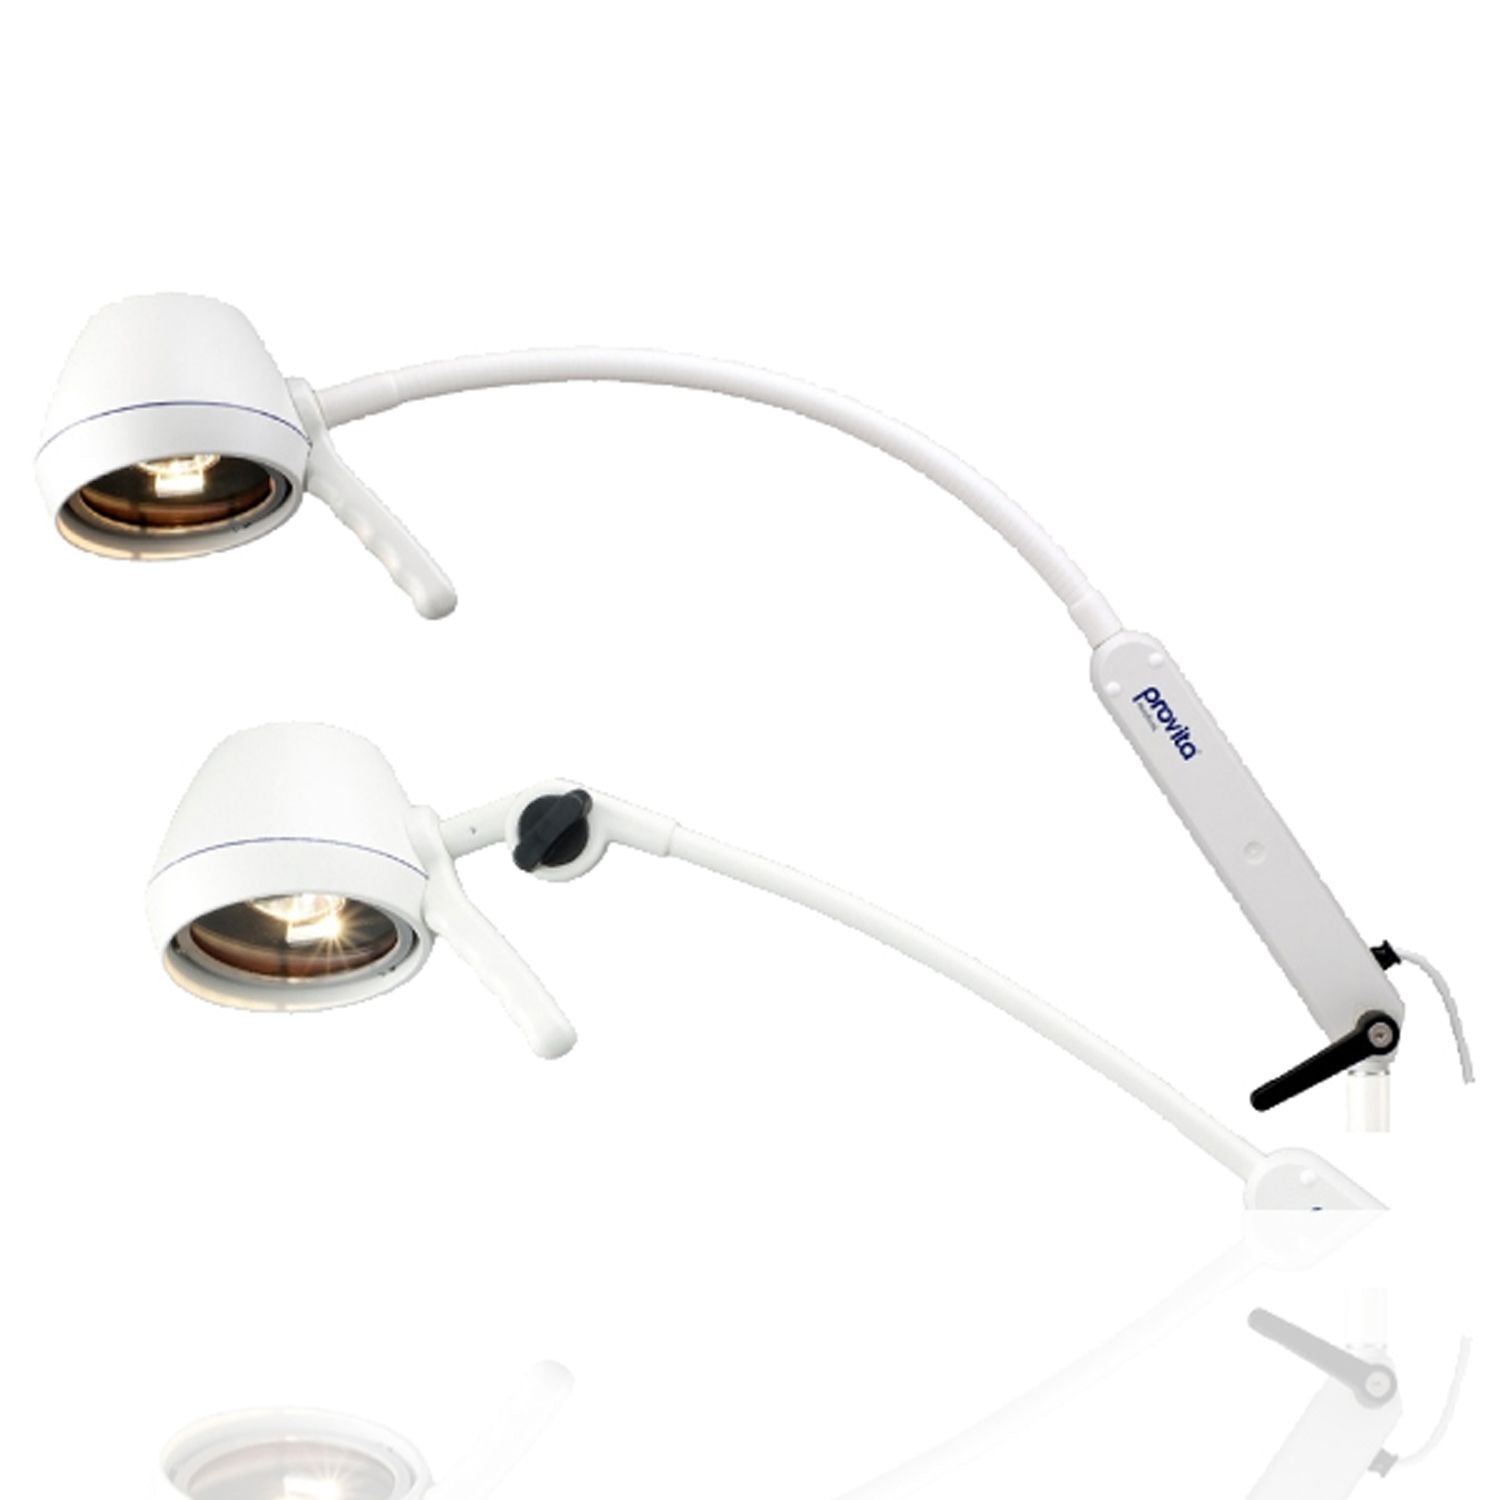 Provita 50watt Examination Lamp with Flexible Gooseneck Arm